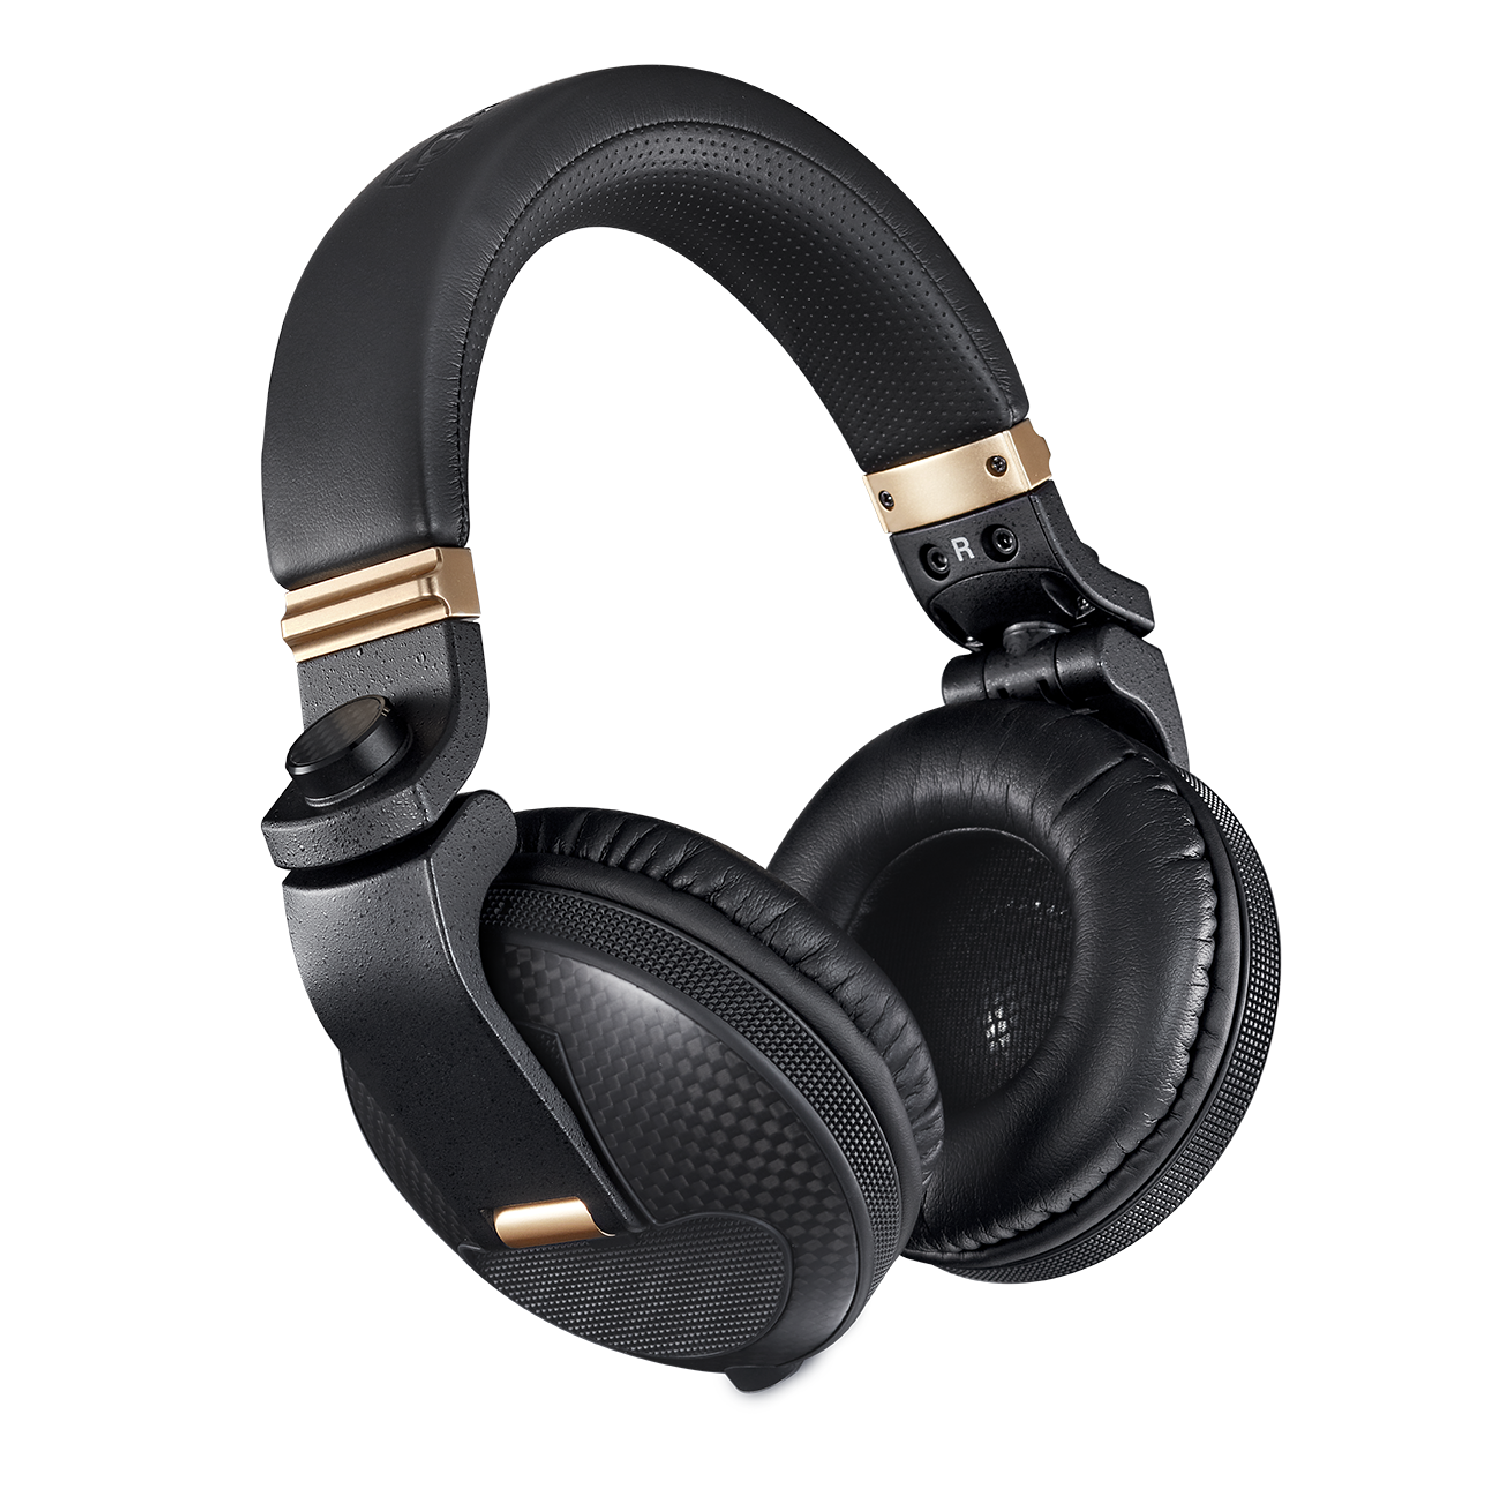 Limited-edition Flagship Over-ear DJ Headphones   HDJ0X10C pioneer